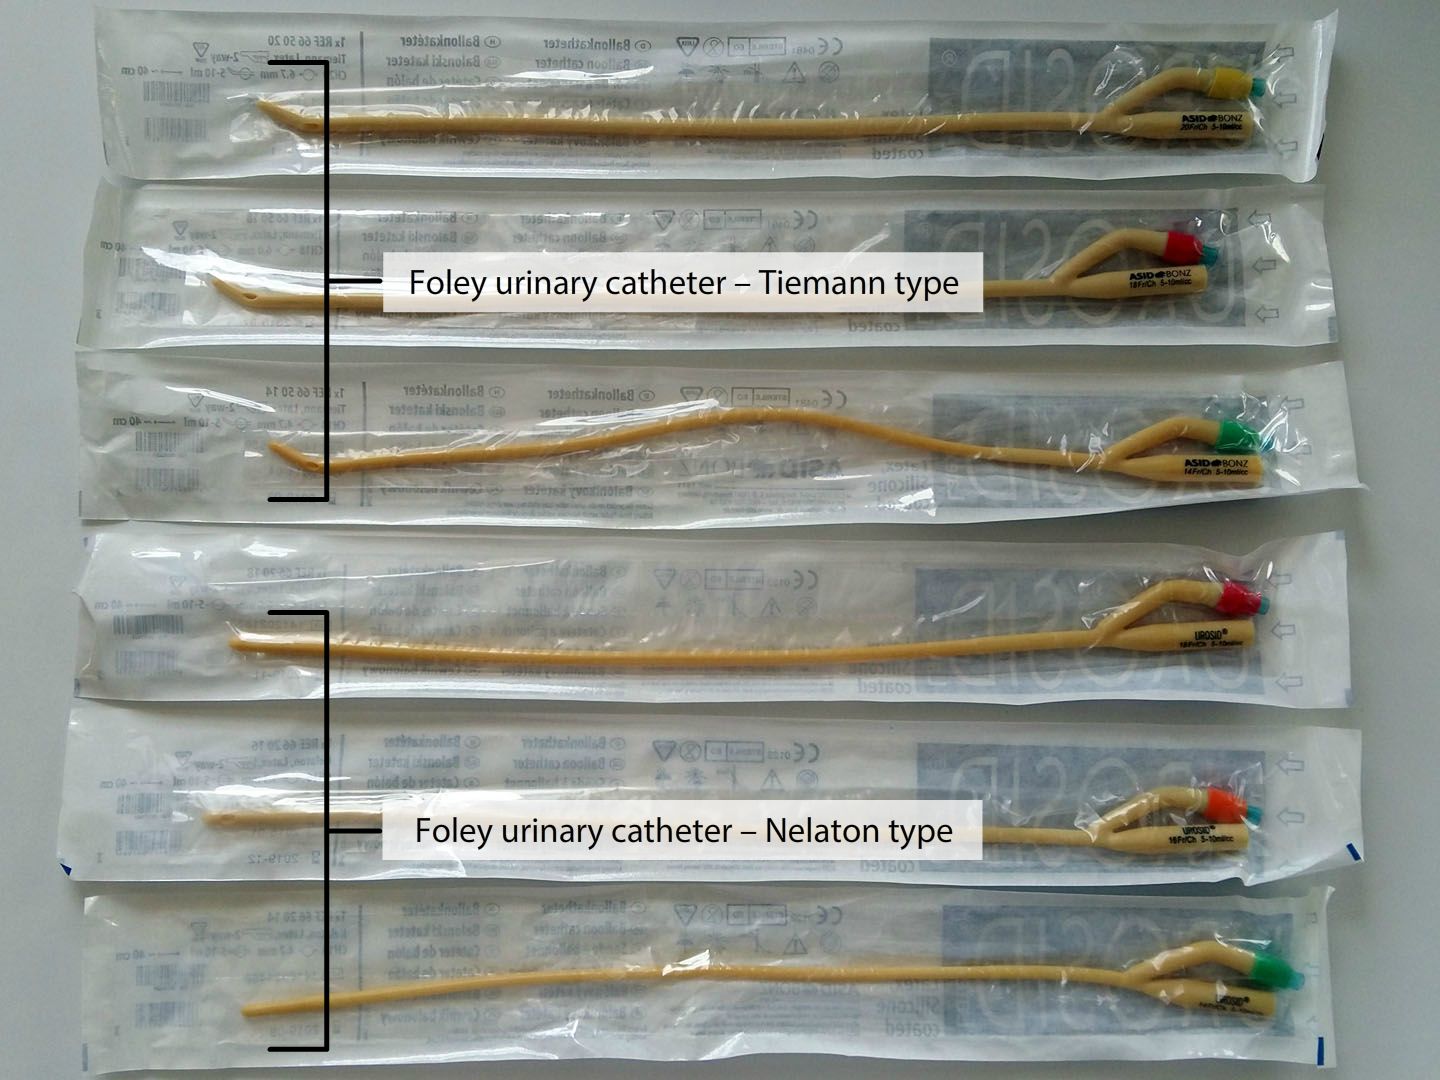 Catheter types – original (sterile) package